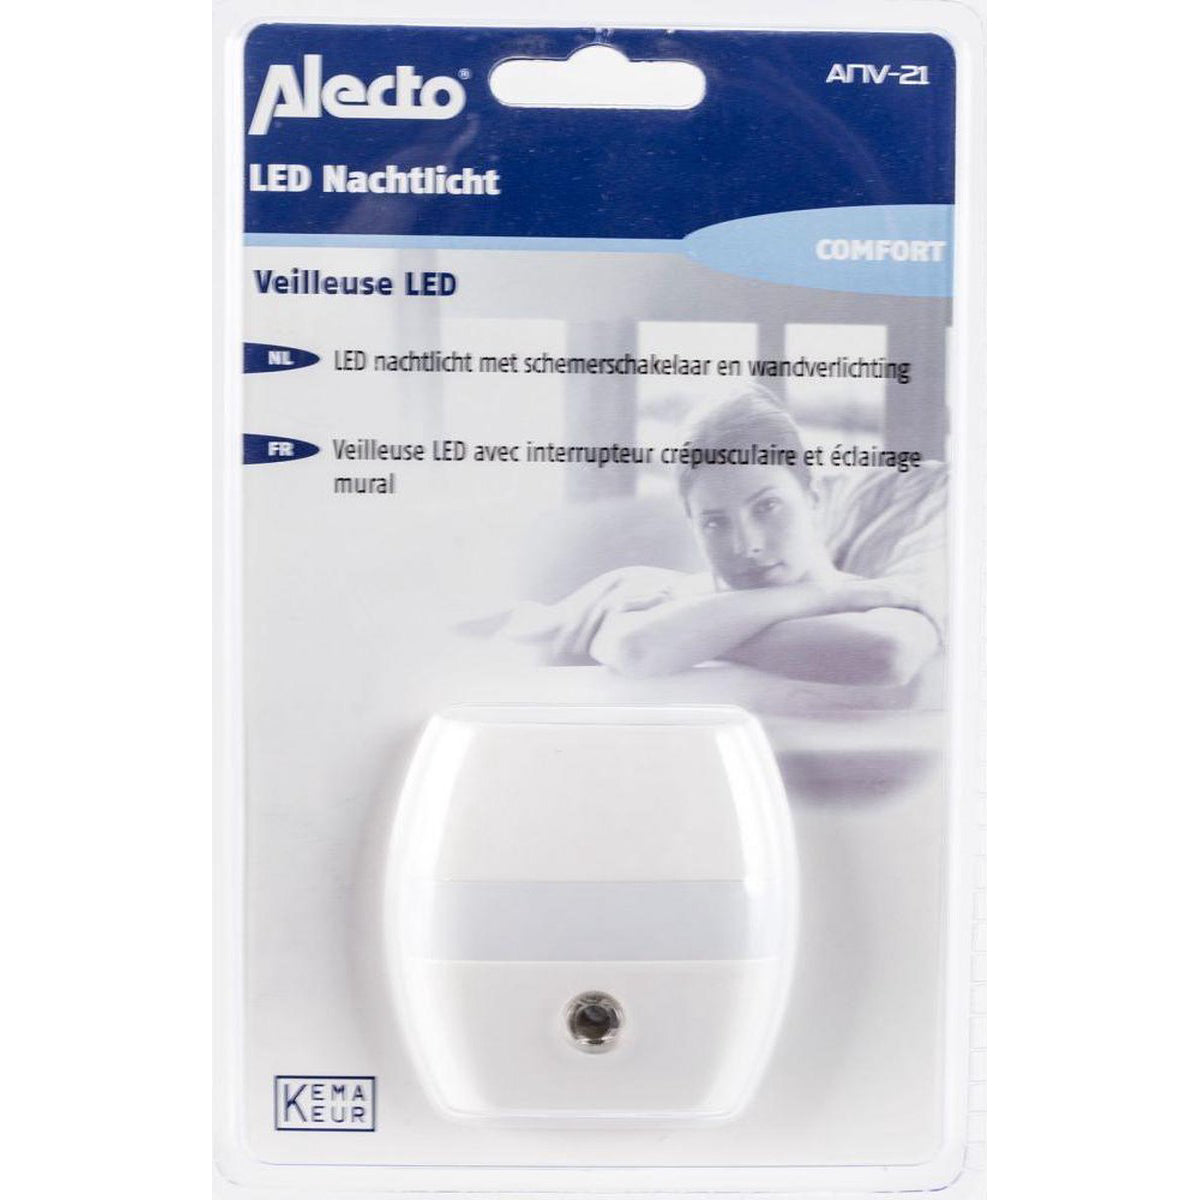 Alecto night light LED